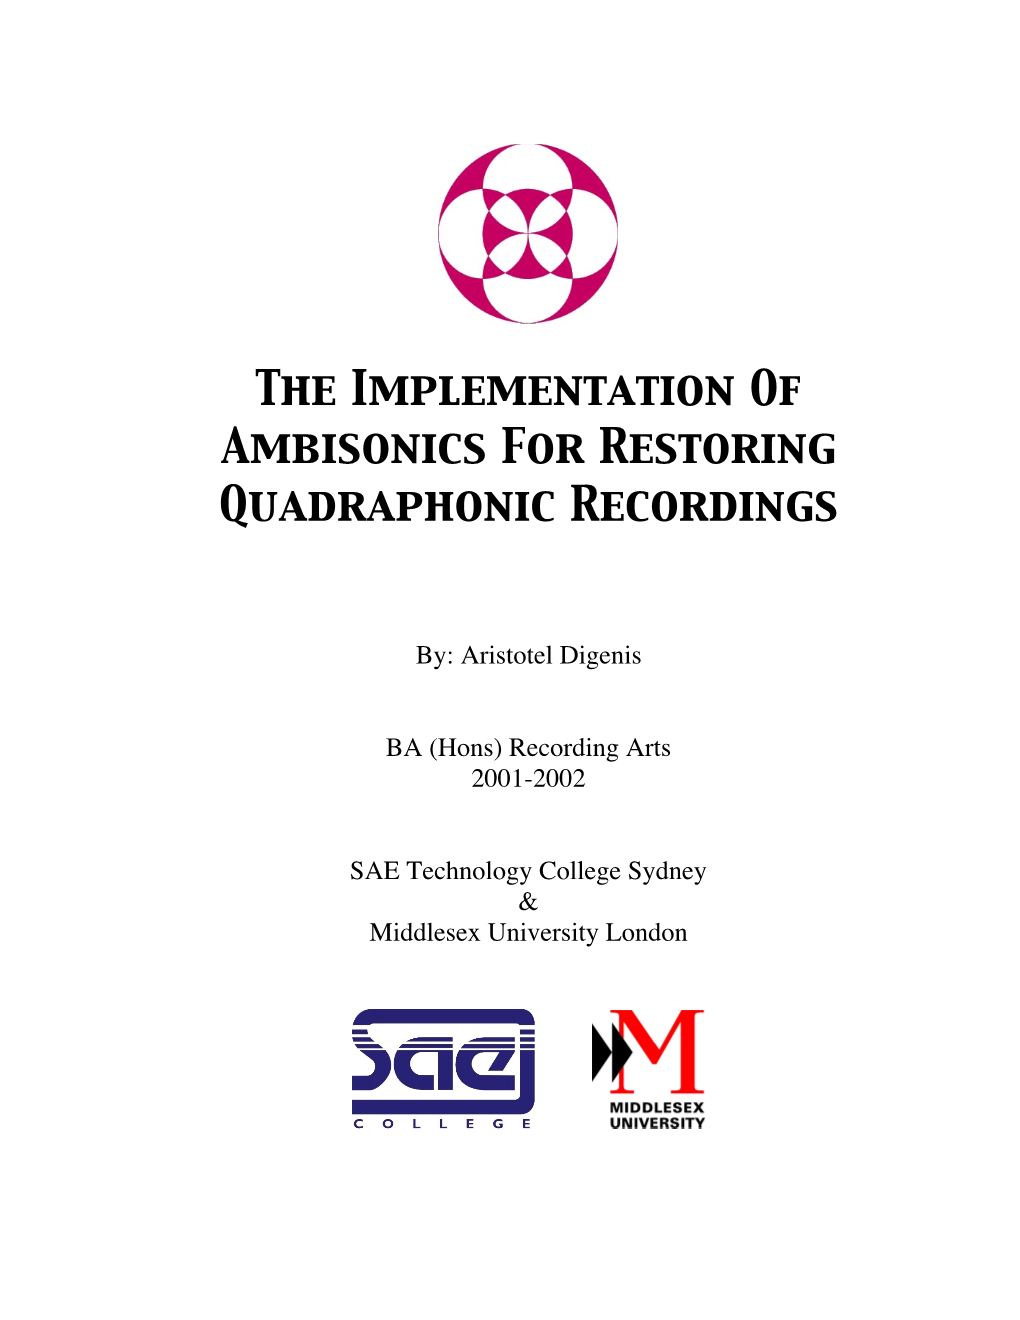 The Implementation of Ambisonics for Restoring Quadraphonic Recordings